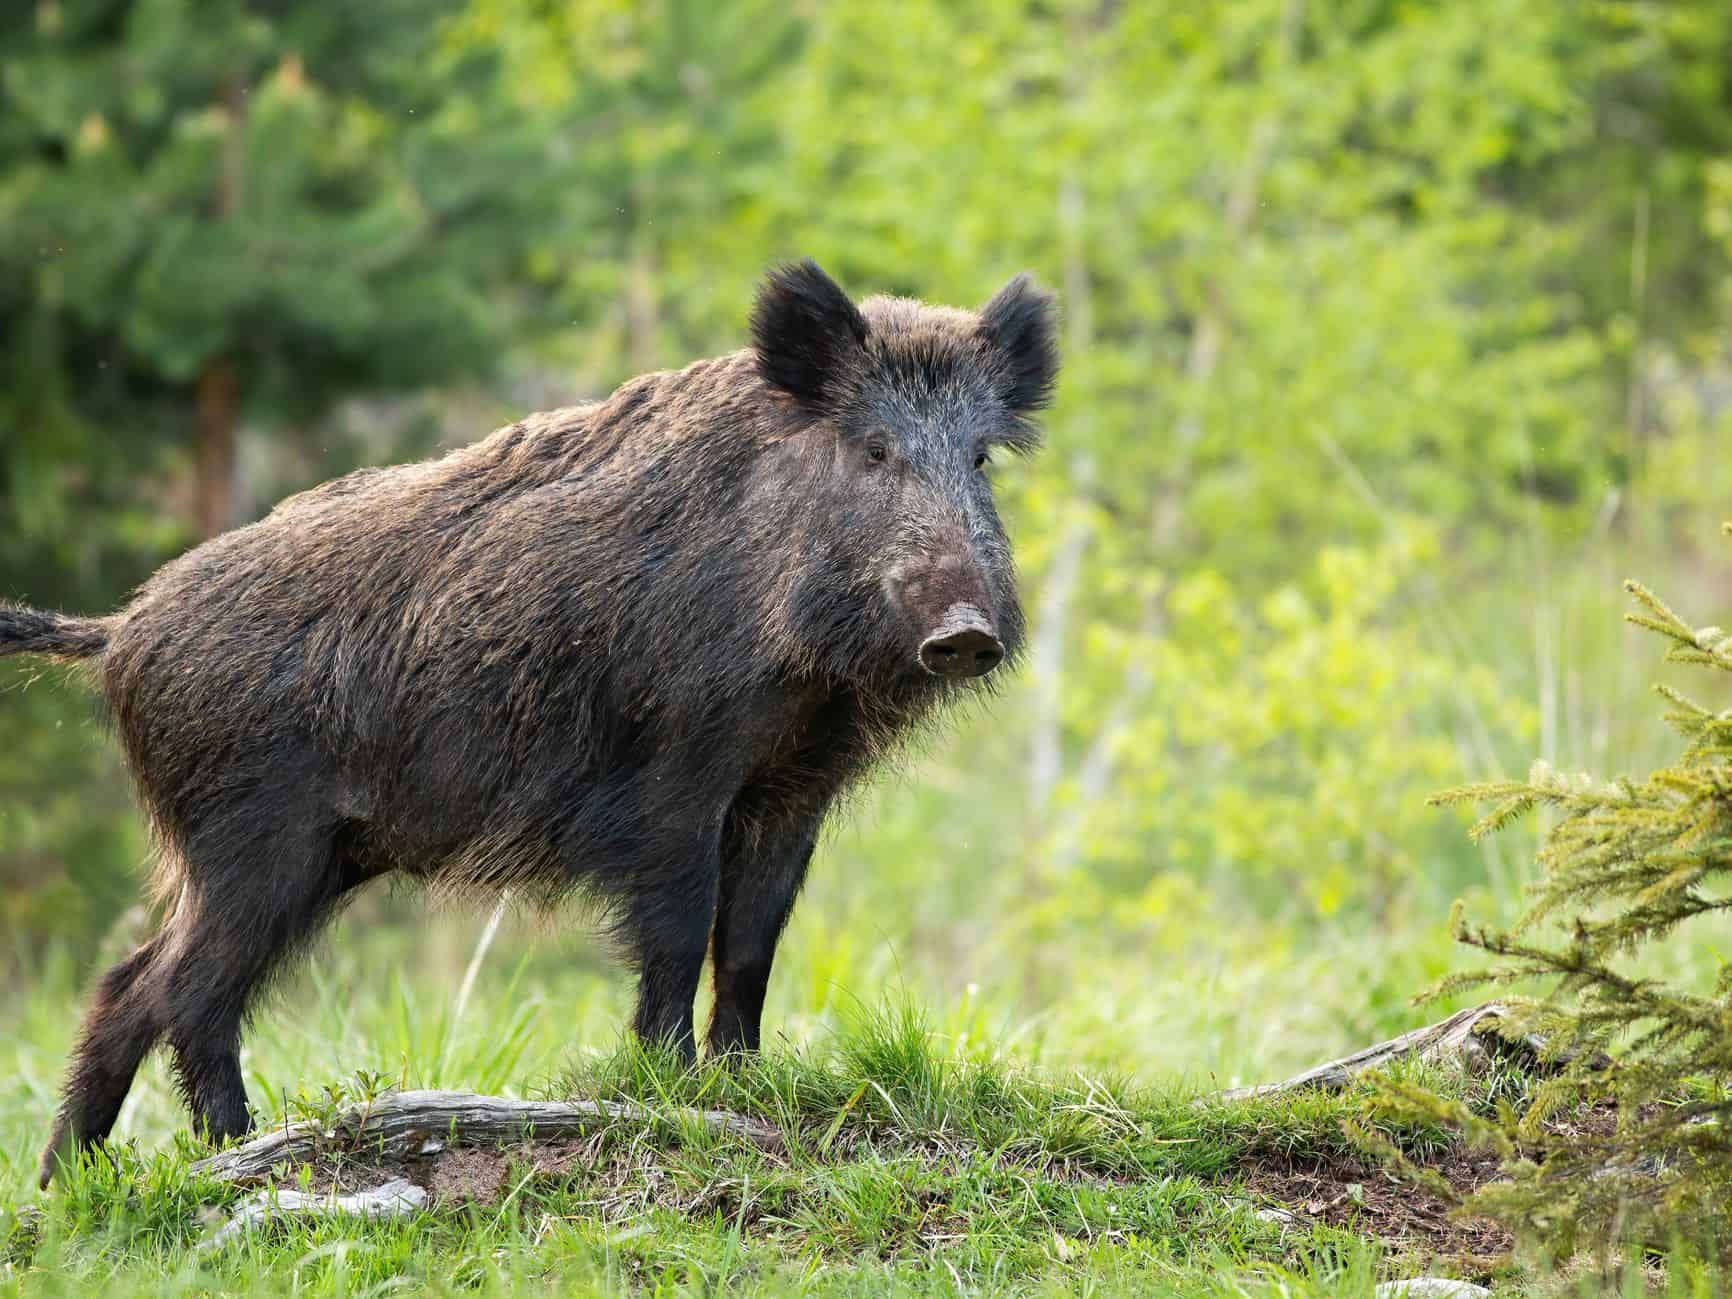 Greece Detects African Swine Fever In Wild Boar In Serres